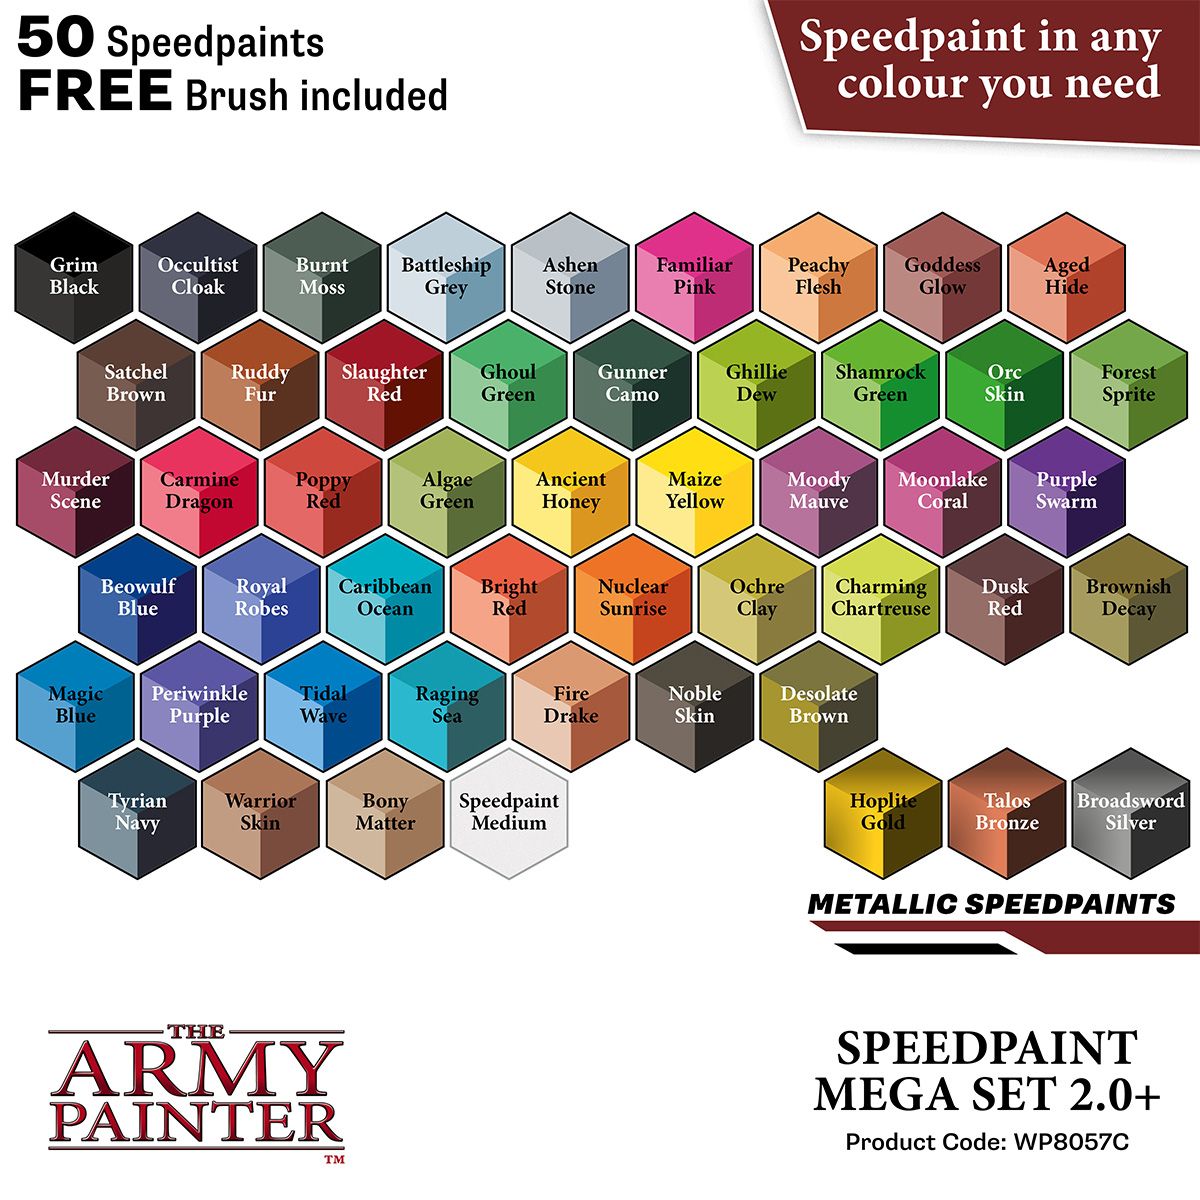 The Army Painter -  Speedpaint Mega Set 2.0+